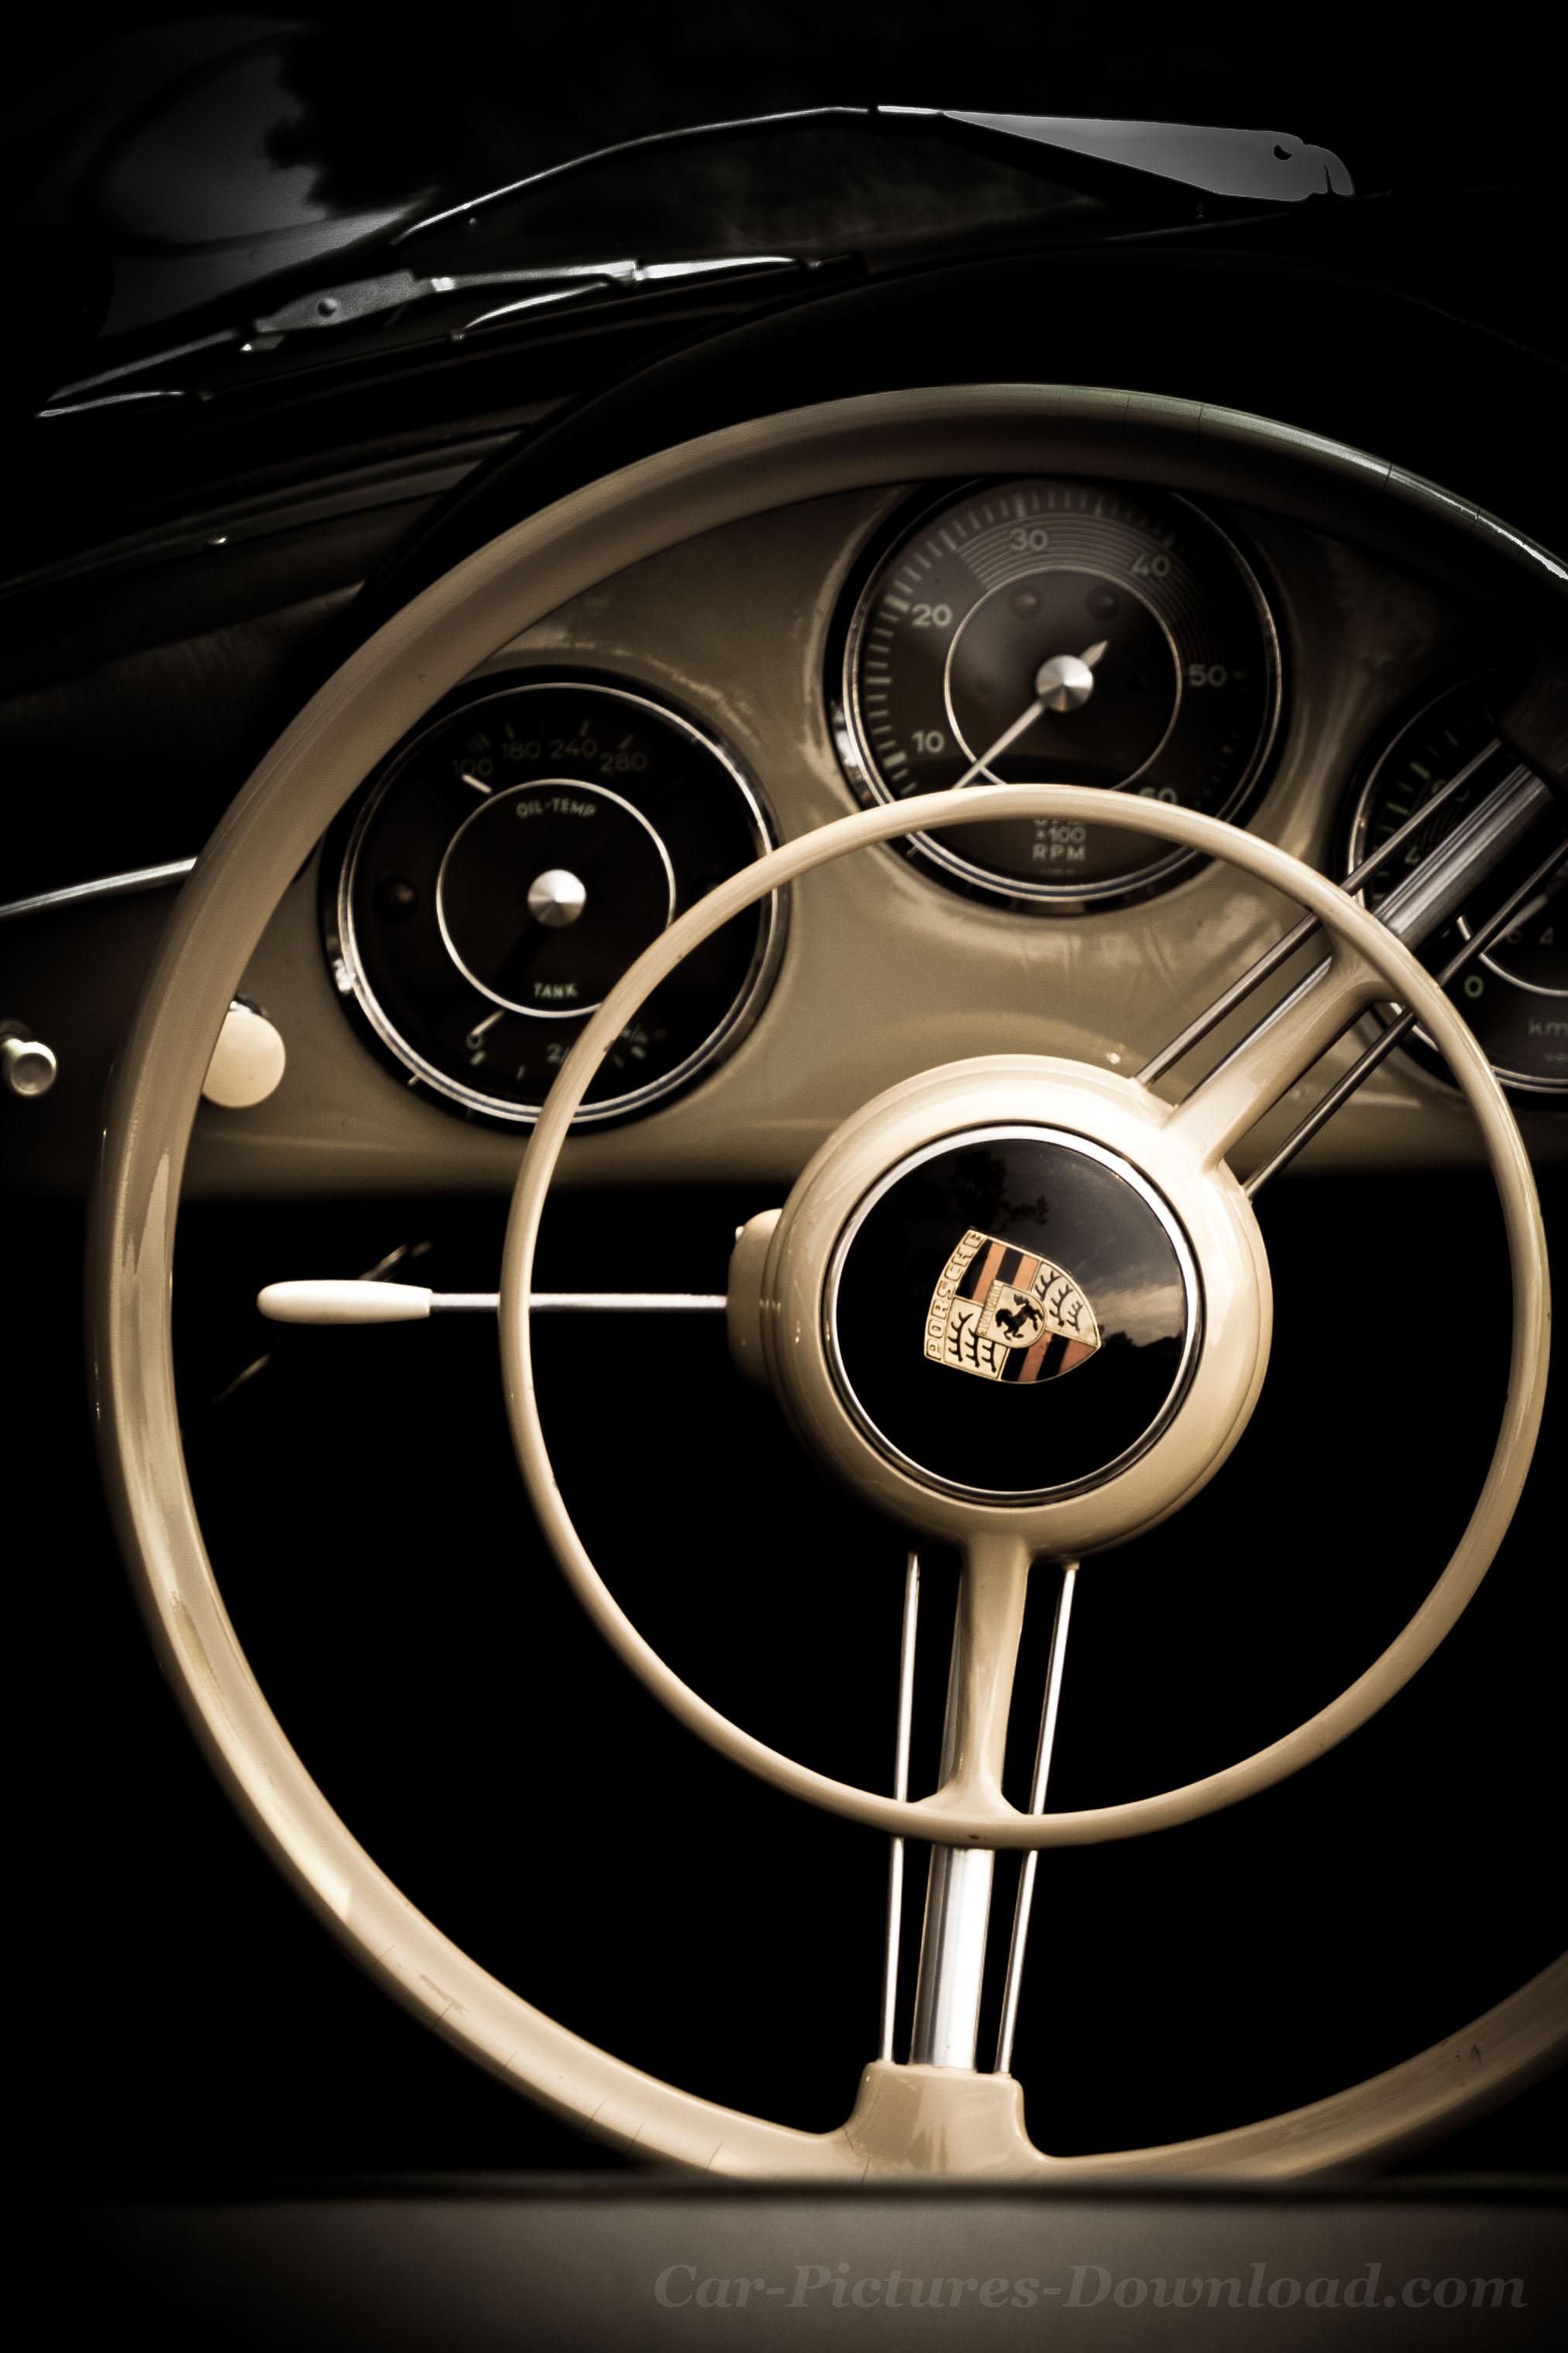 Porsche Wallpaper HD, Emblem & Logo Image Free To Download